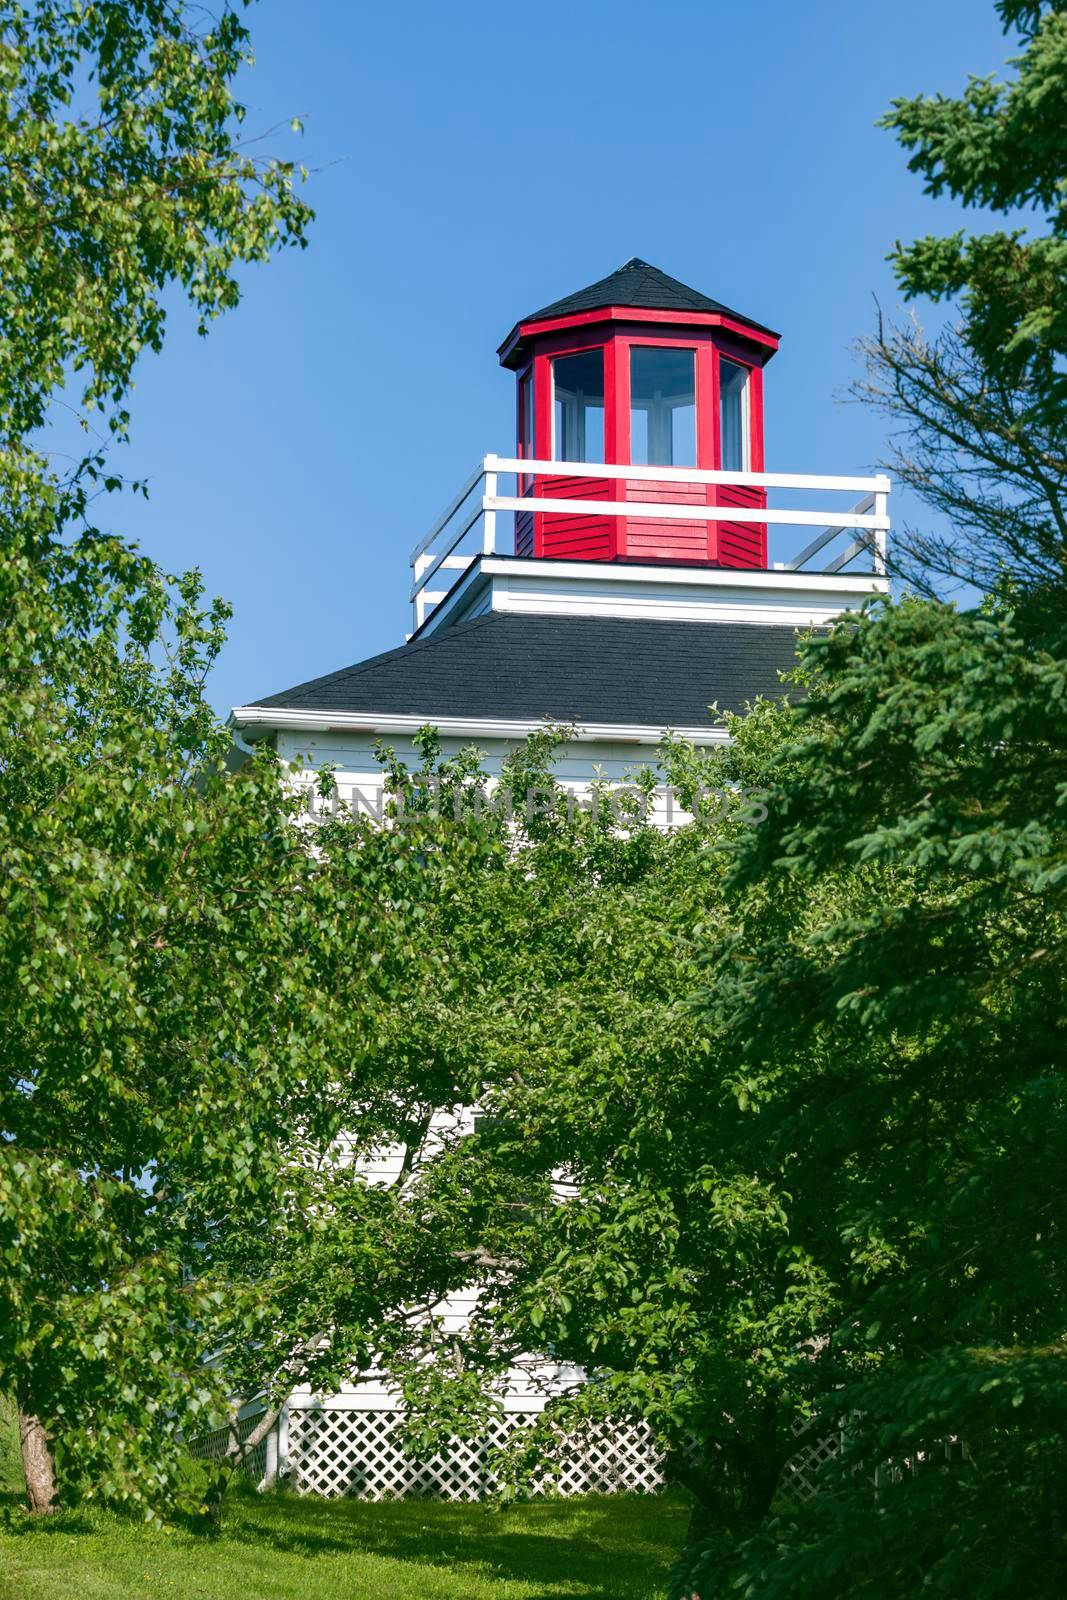 Burntcoat Head Lighthouse in the Bay of Fundy. Nova Scotia, Canada.